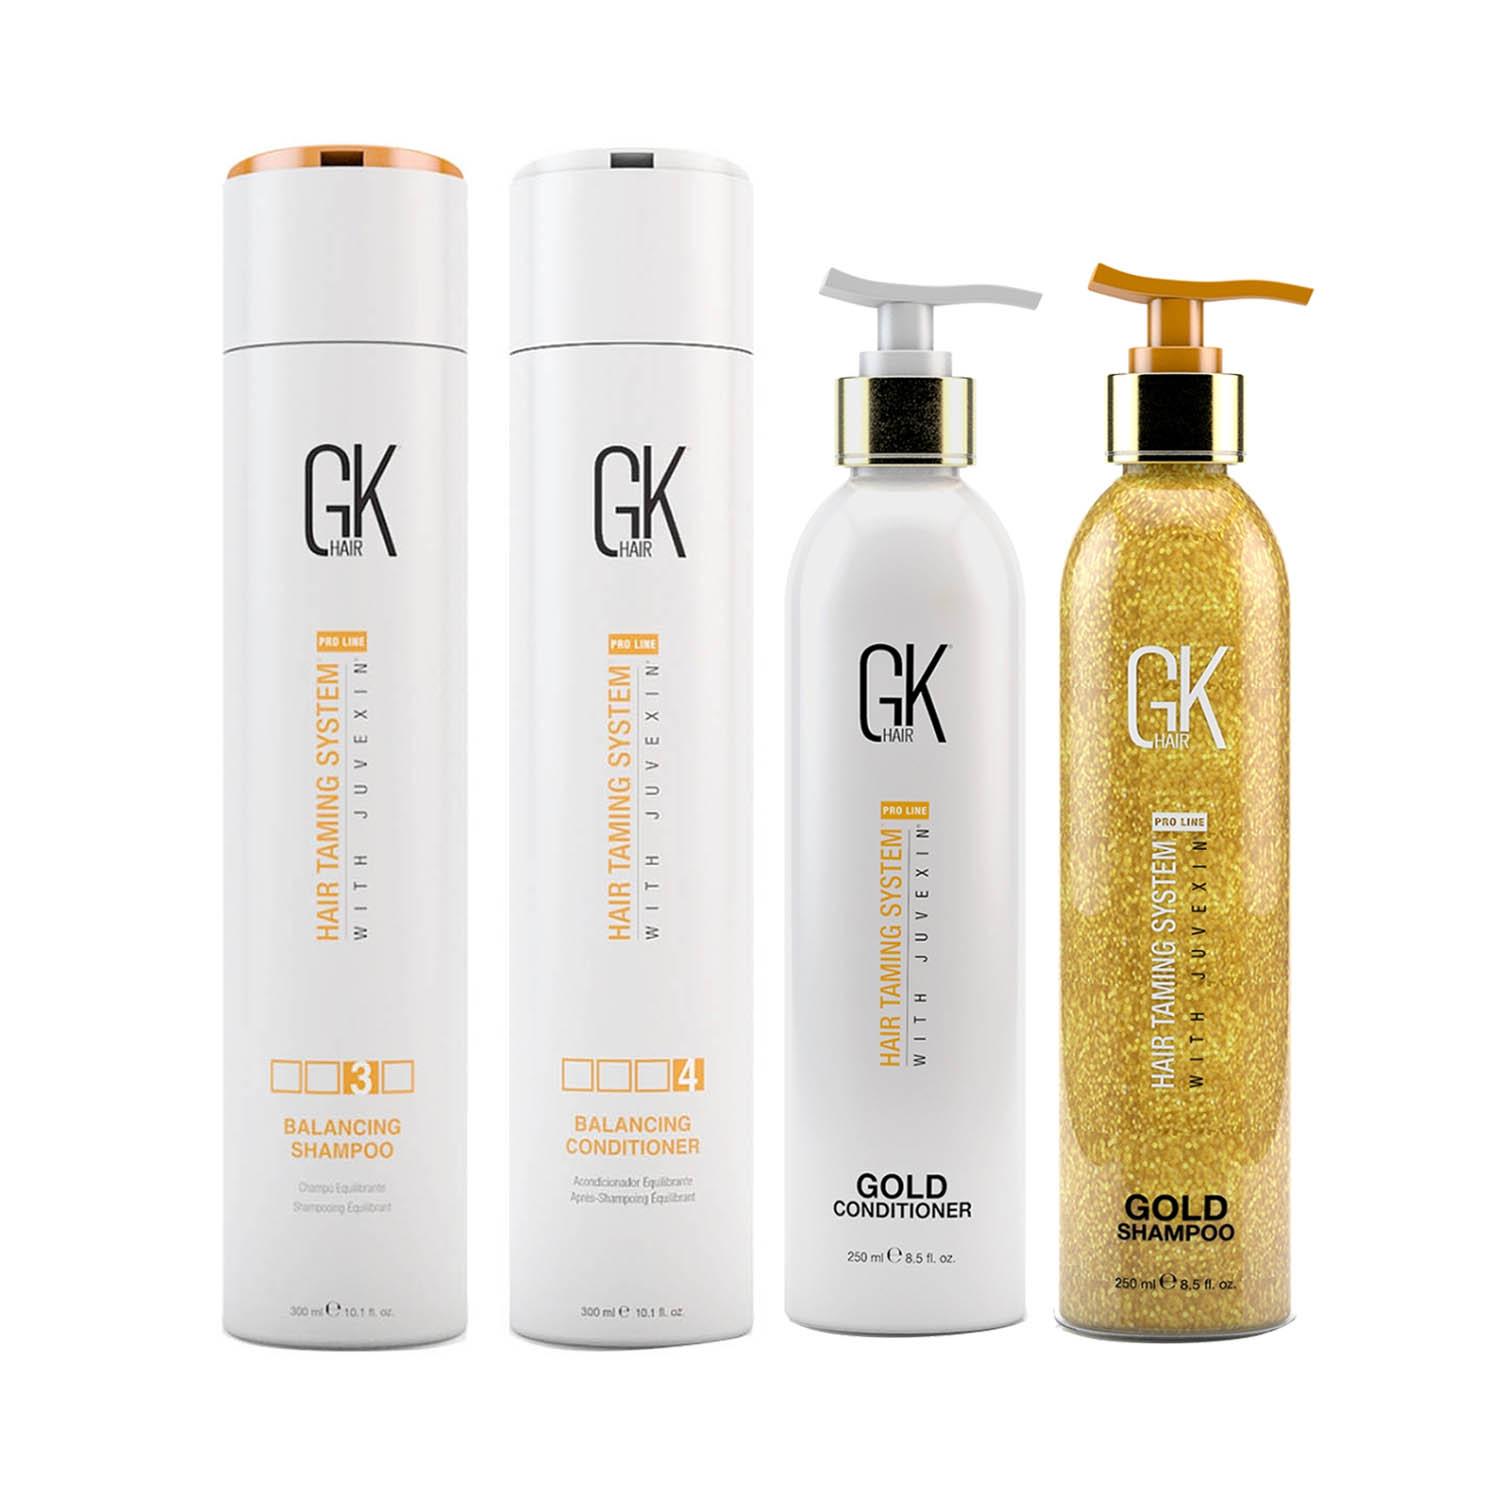 GK Hair | GK Hair Balancing Shampoo and Conditioner 300m with Gold Shampoo and Conditioner 250ml